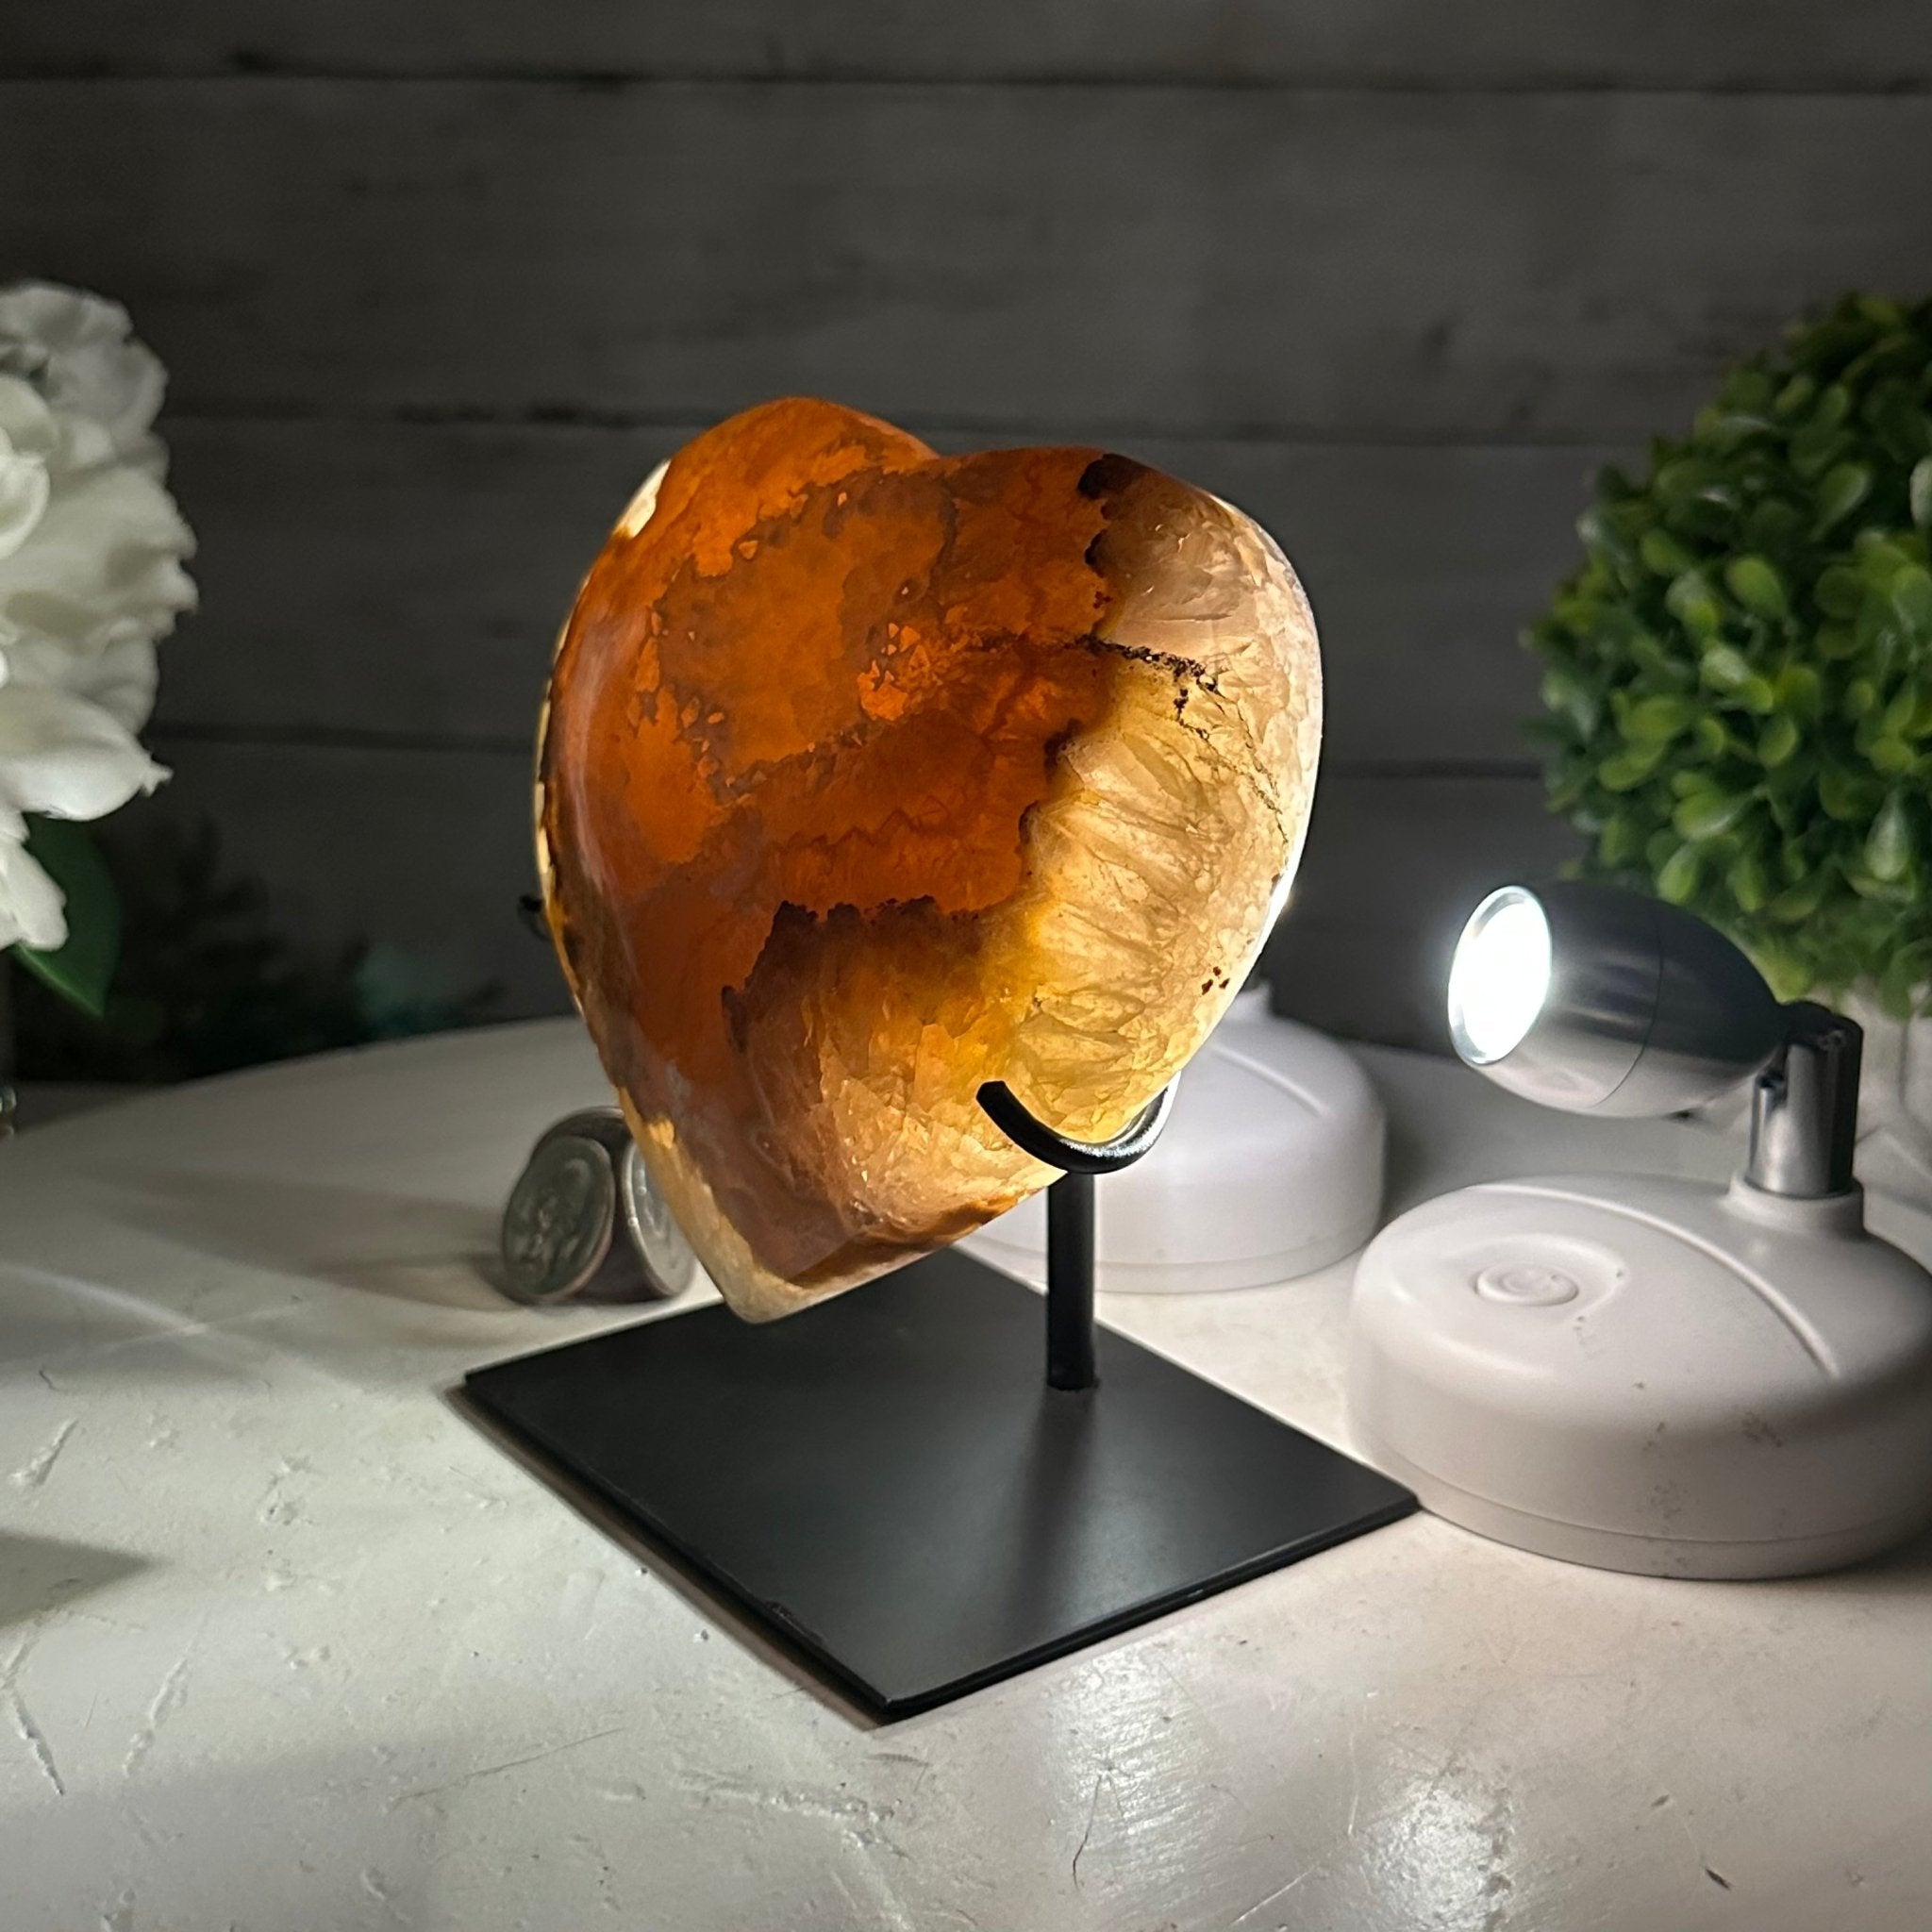 Polished Agate Heart Geode on a Metal Stand, 2.2 lbs & 5.25" Tall, Model #5468-0064 by Brazil Gems - Brazil GemsBrazil GemsPolished Agate Heart Geode on a Metal Stand, 2.2 lbs & 5.25" Tall, Model #5468-0064 by Brazil GemsHearts5468-0064